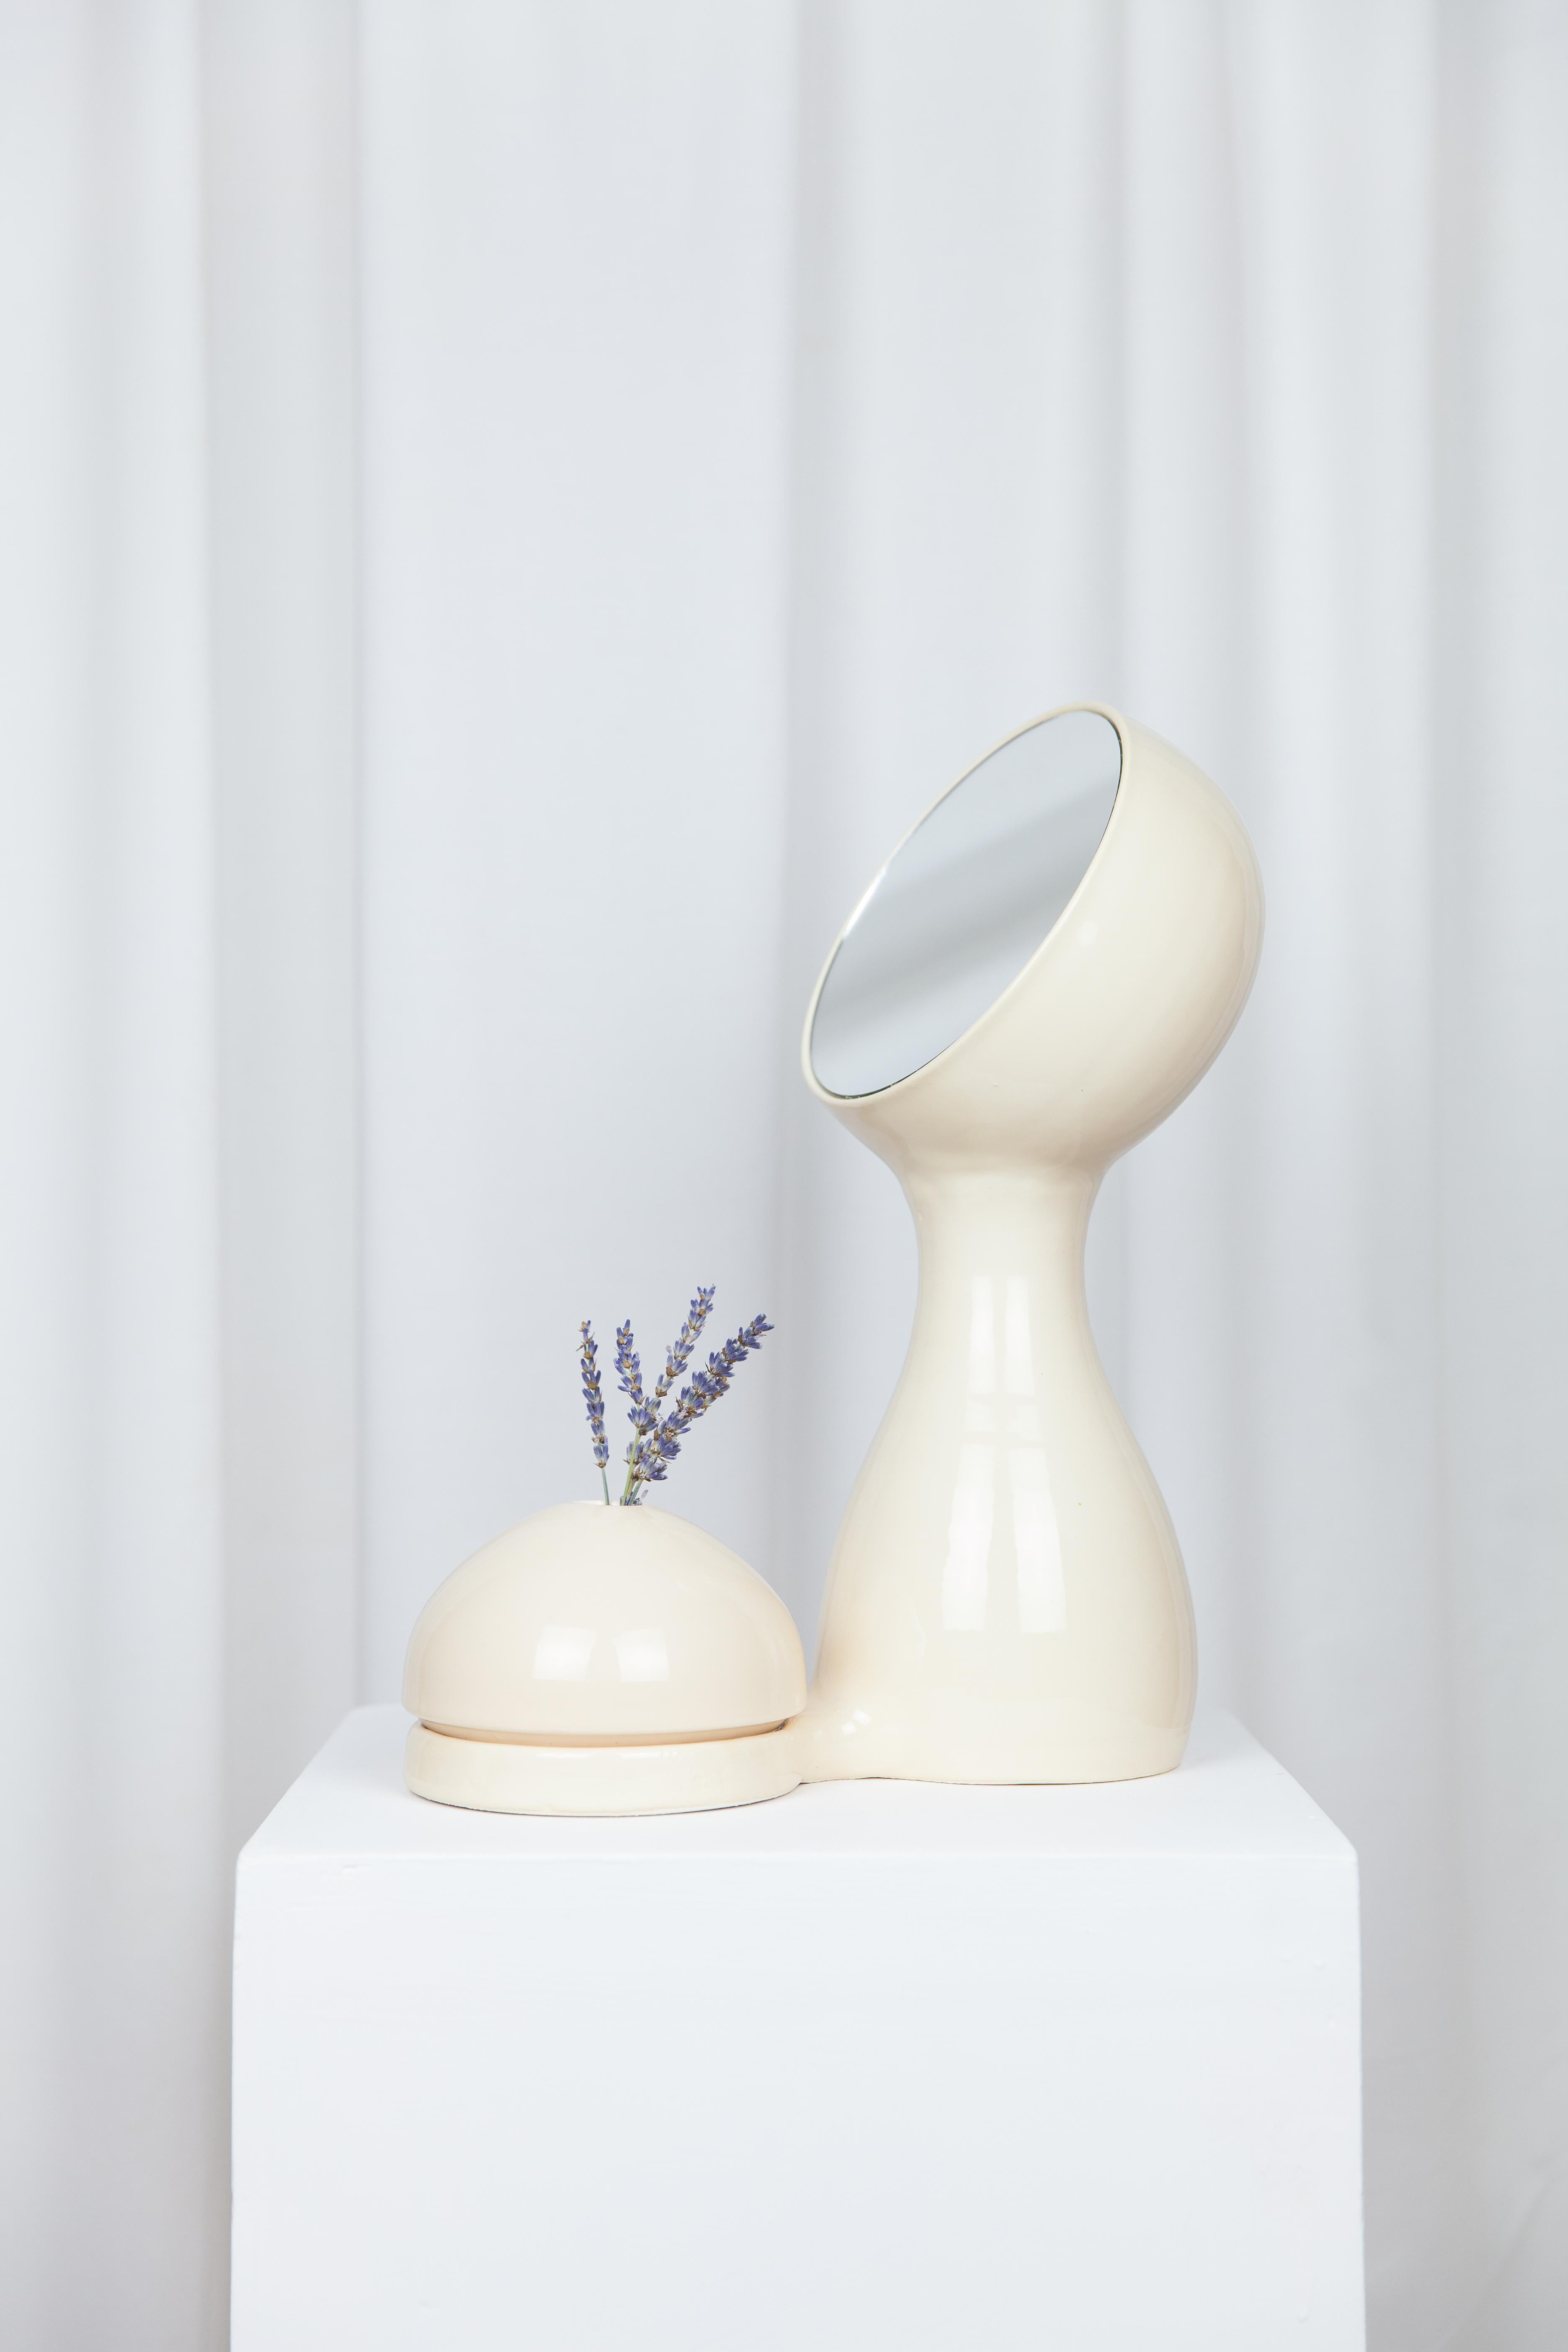 Contemporary Wit Mirror + Vase Terracotta by Lola Mayeras